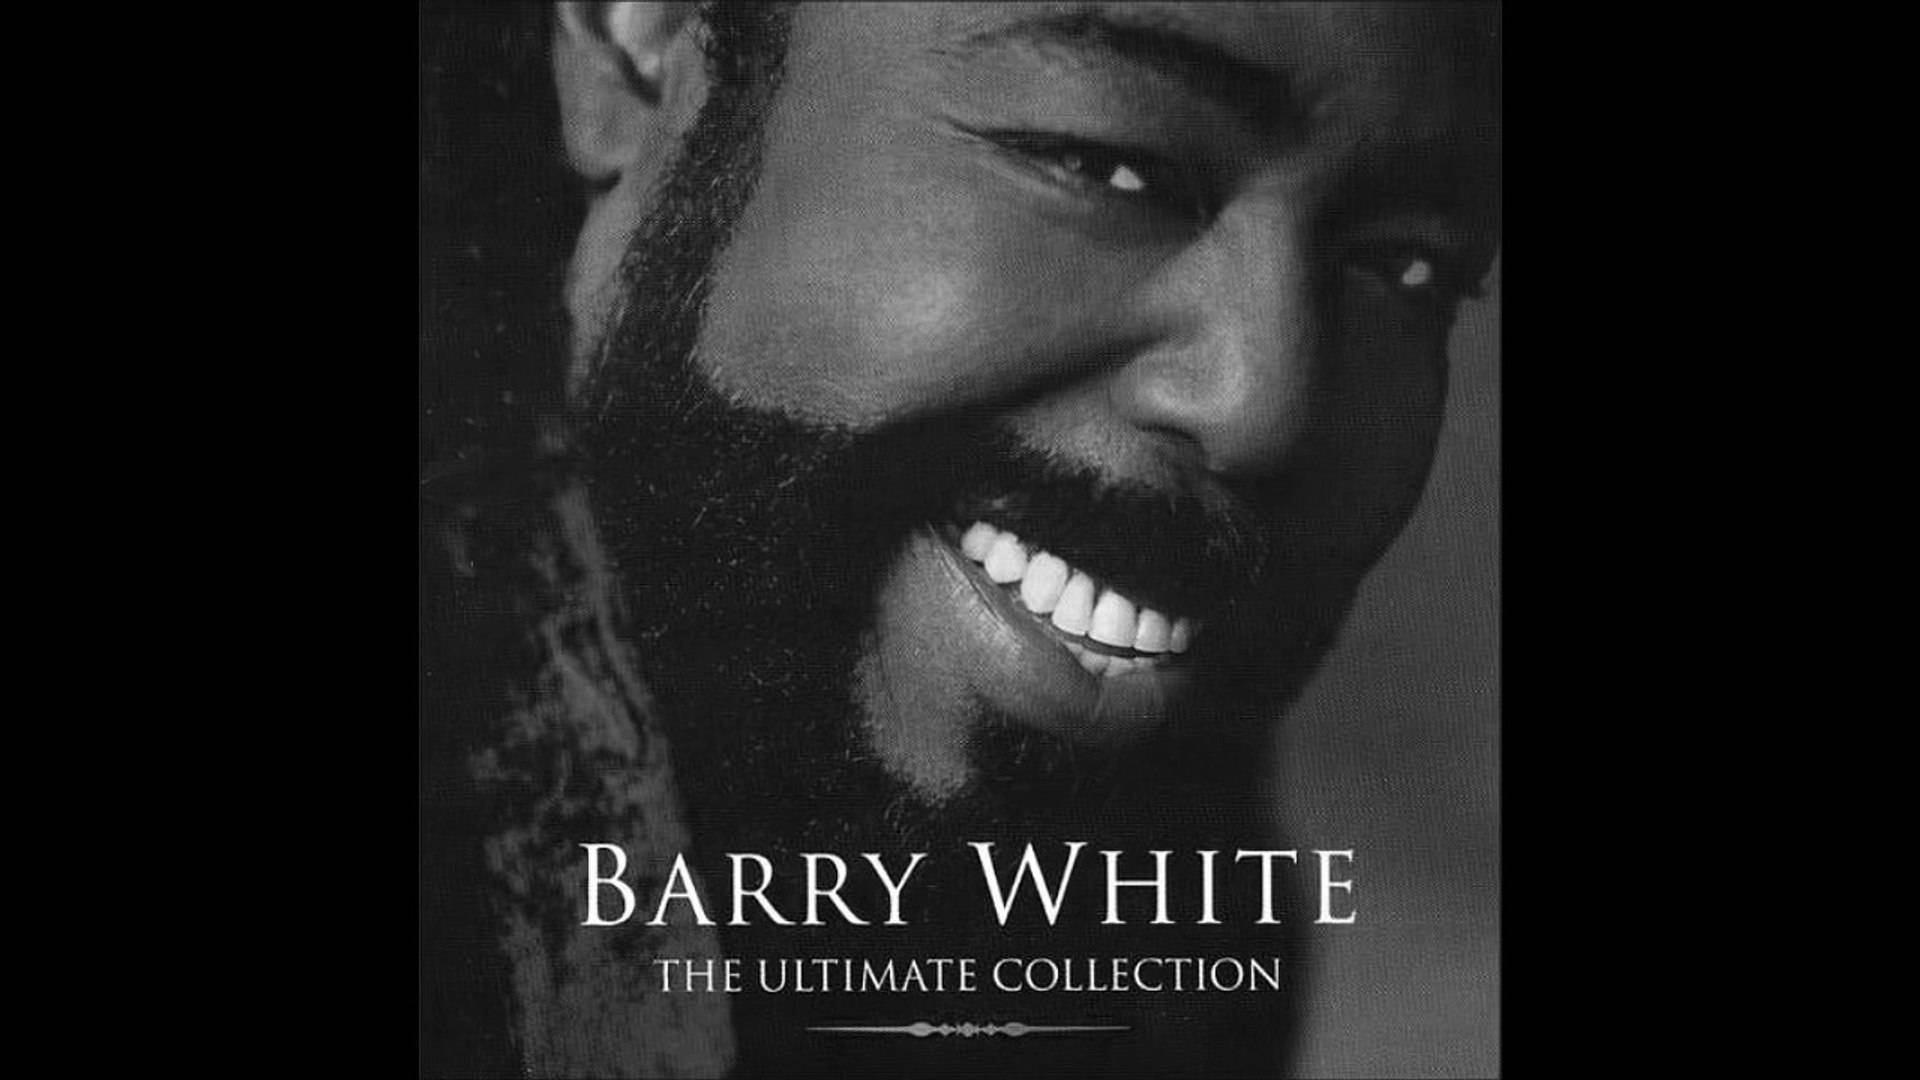 Barrywhite The Ultimate Collection - Barry White Den Ultimata Samlingen Wallpaper